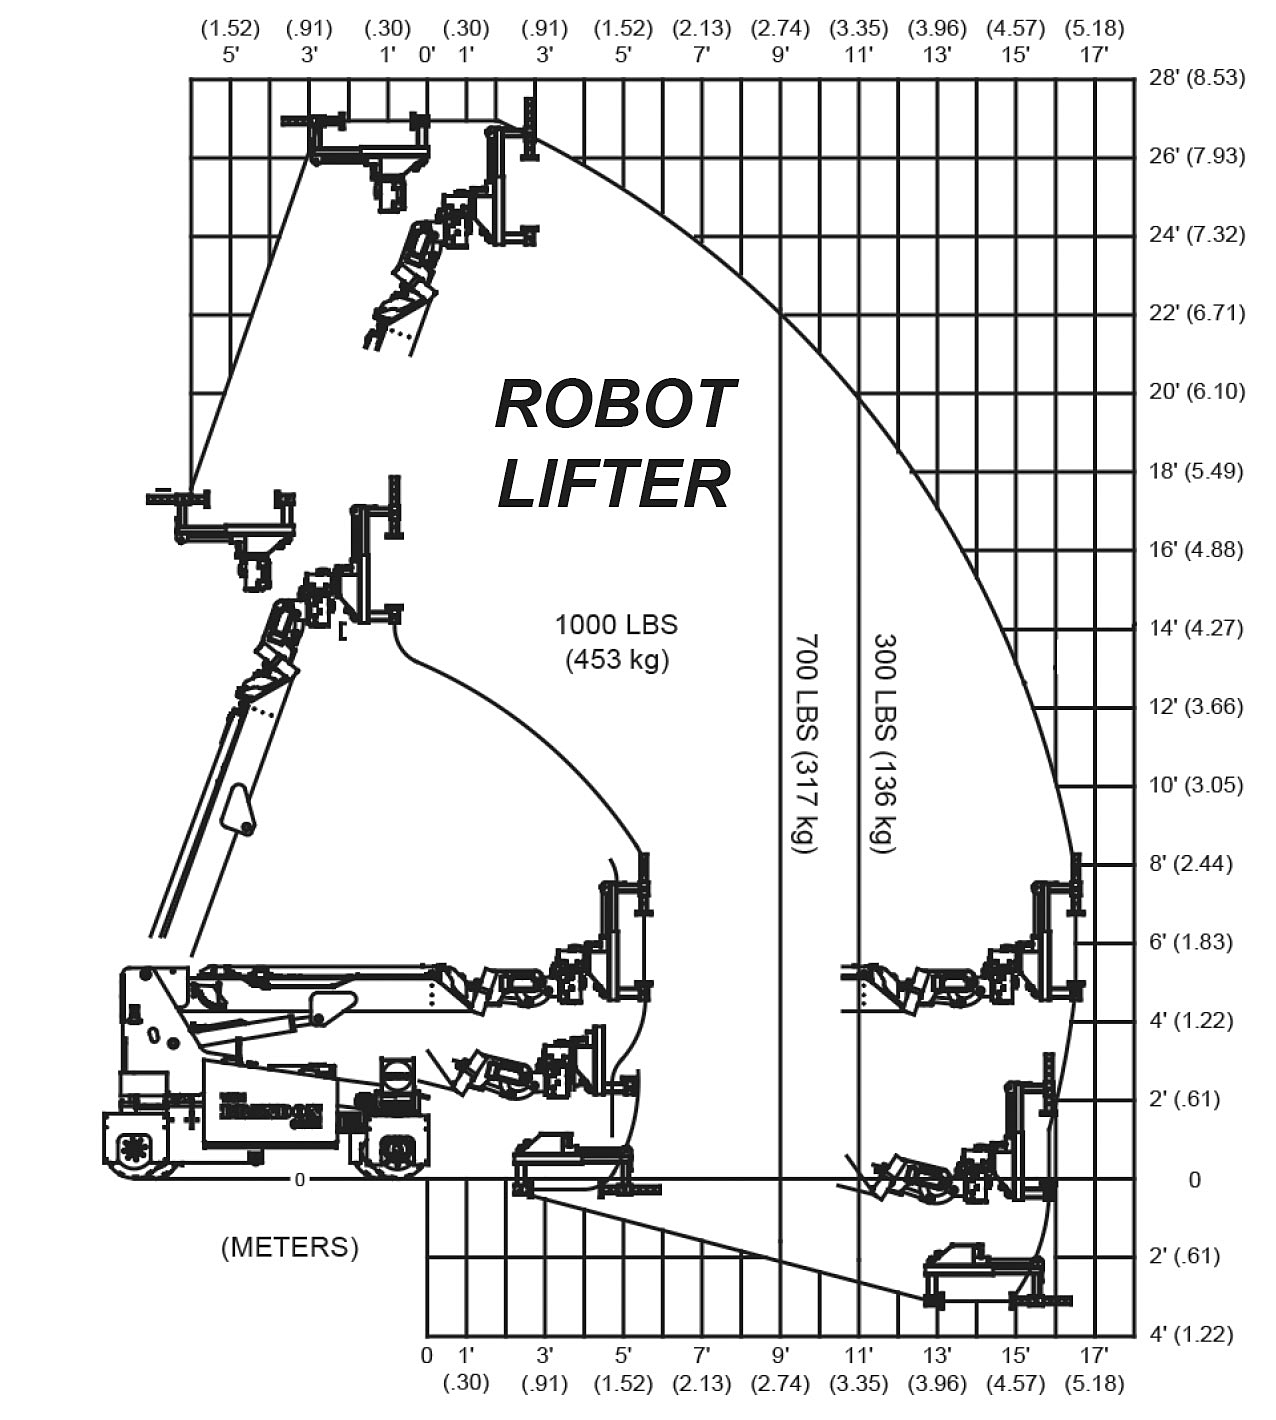 Brandon Omni Robot Lifter Load Capacity